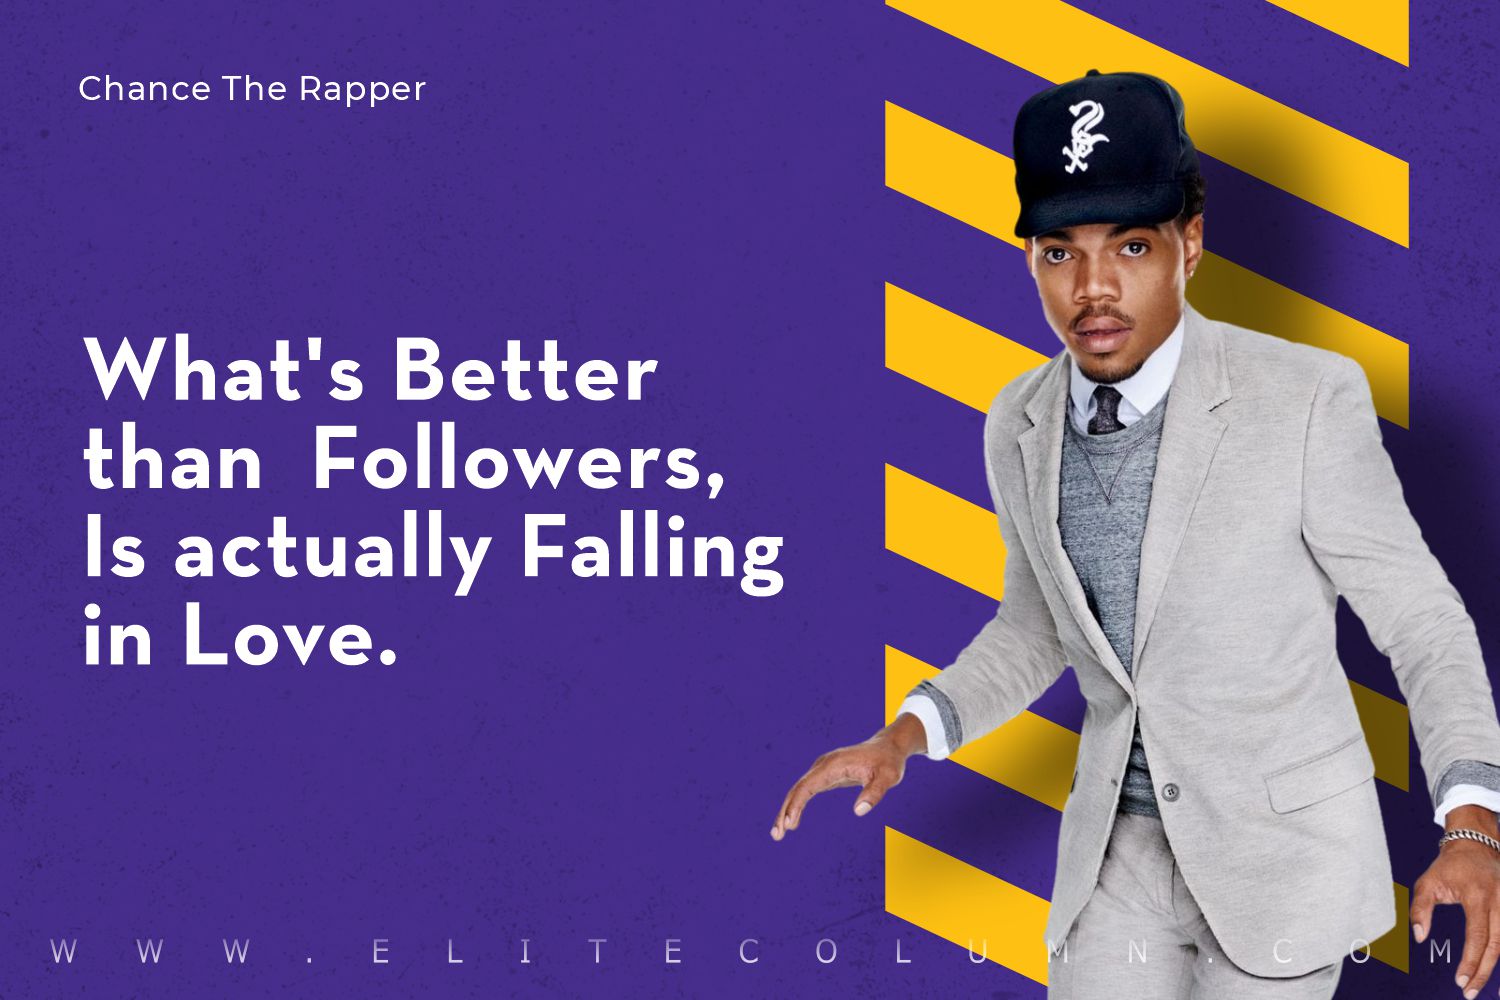 5 Famous Chance The Rapper Quotes